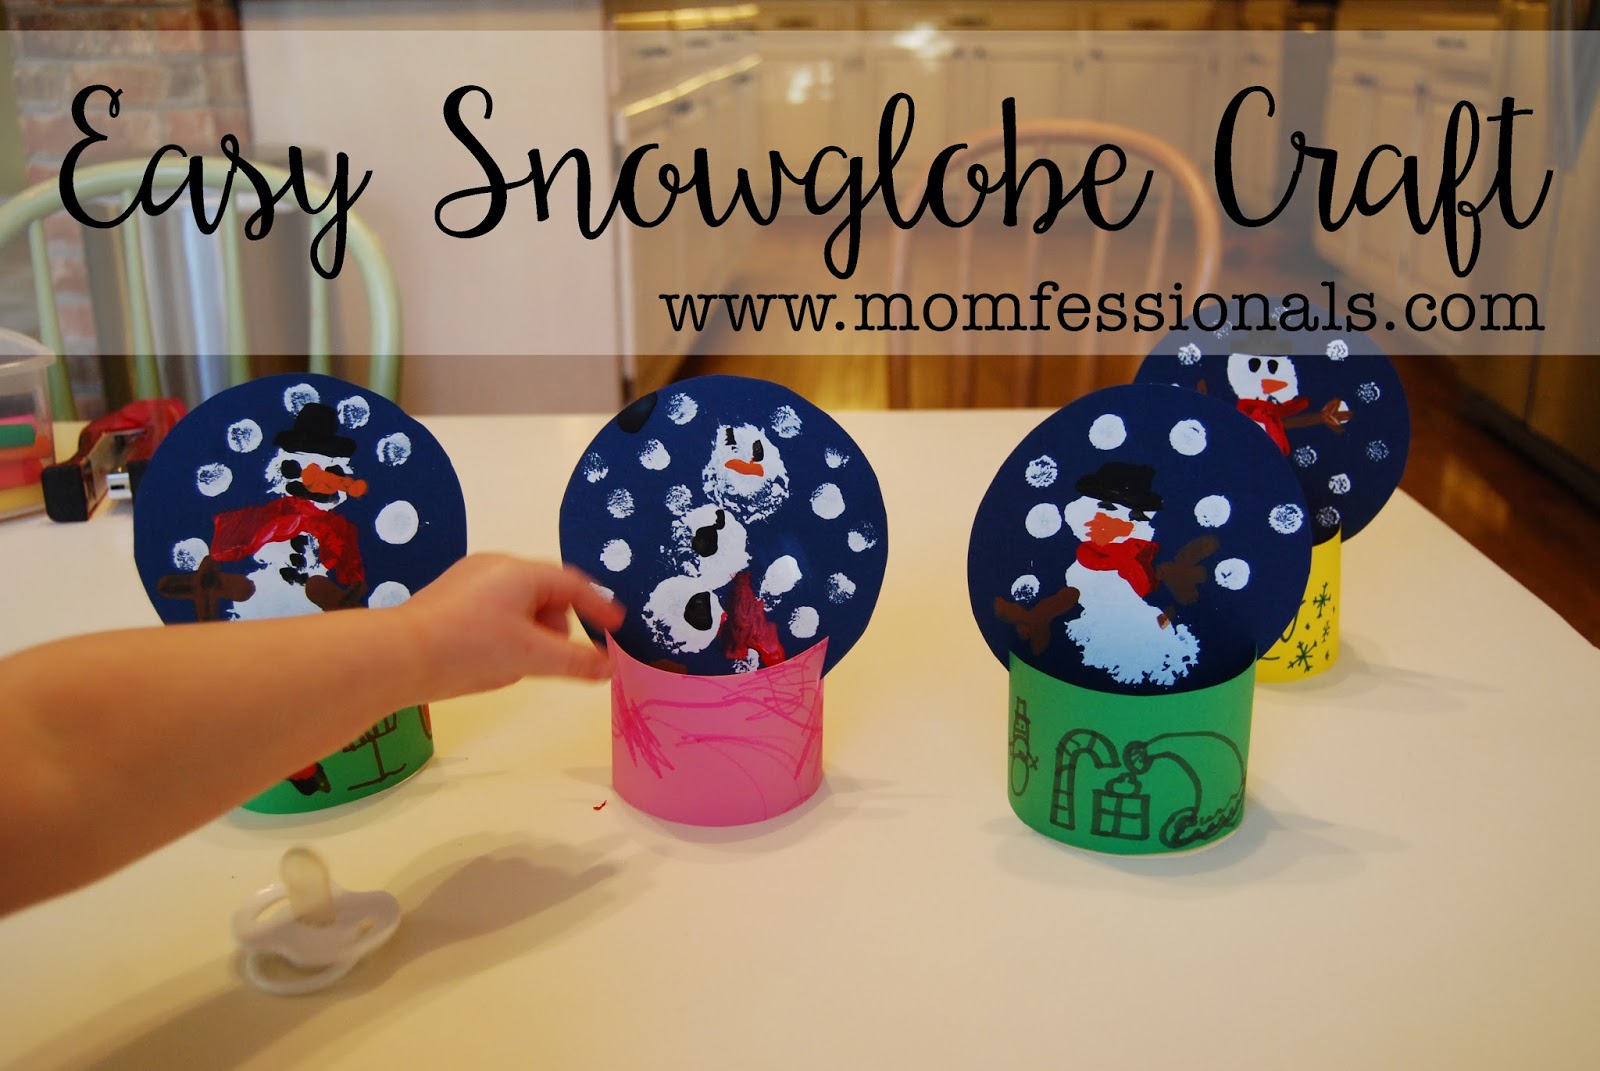 ⛄ DIY Snow Globe - EASY Snow Globe Craft for Kids